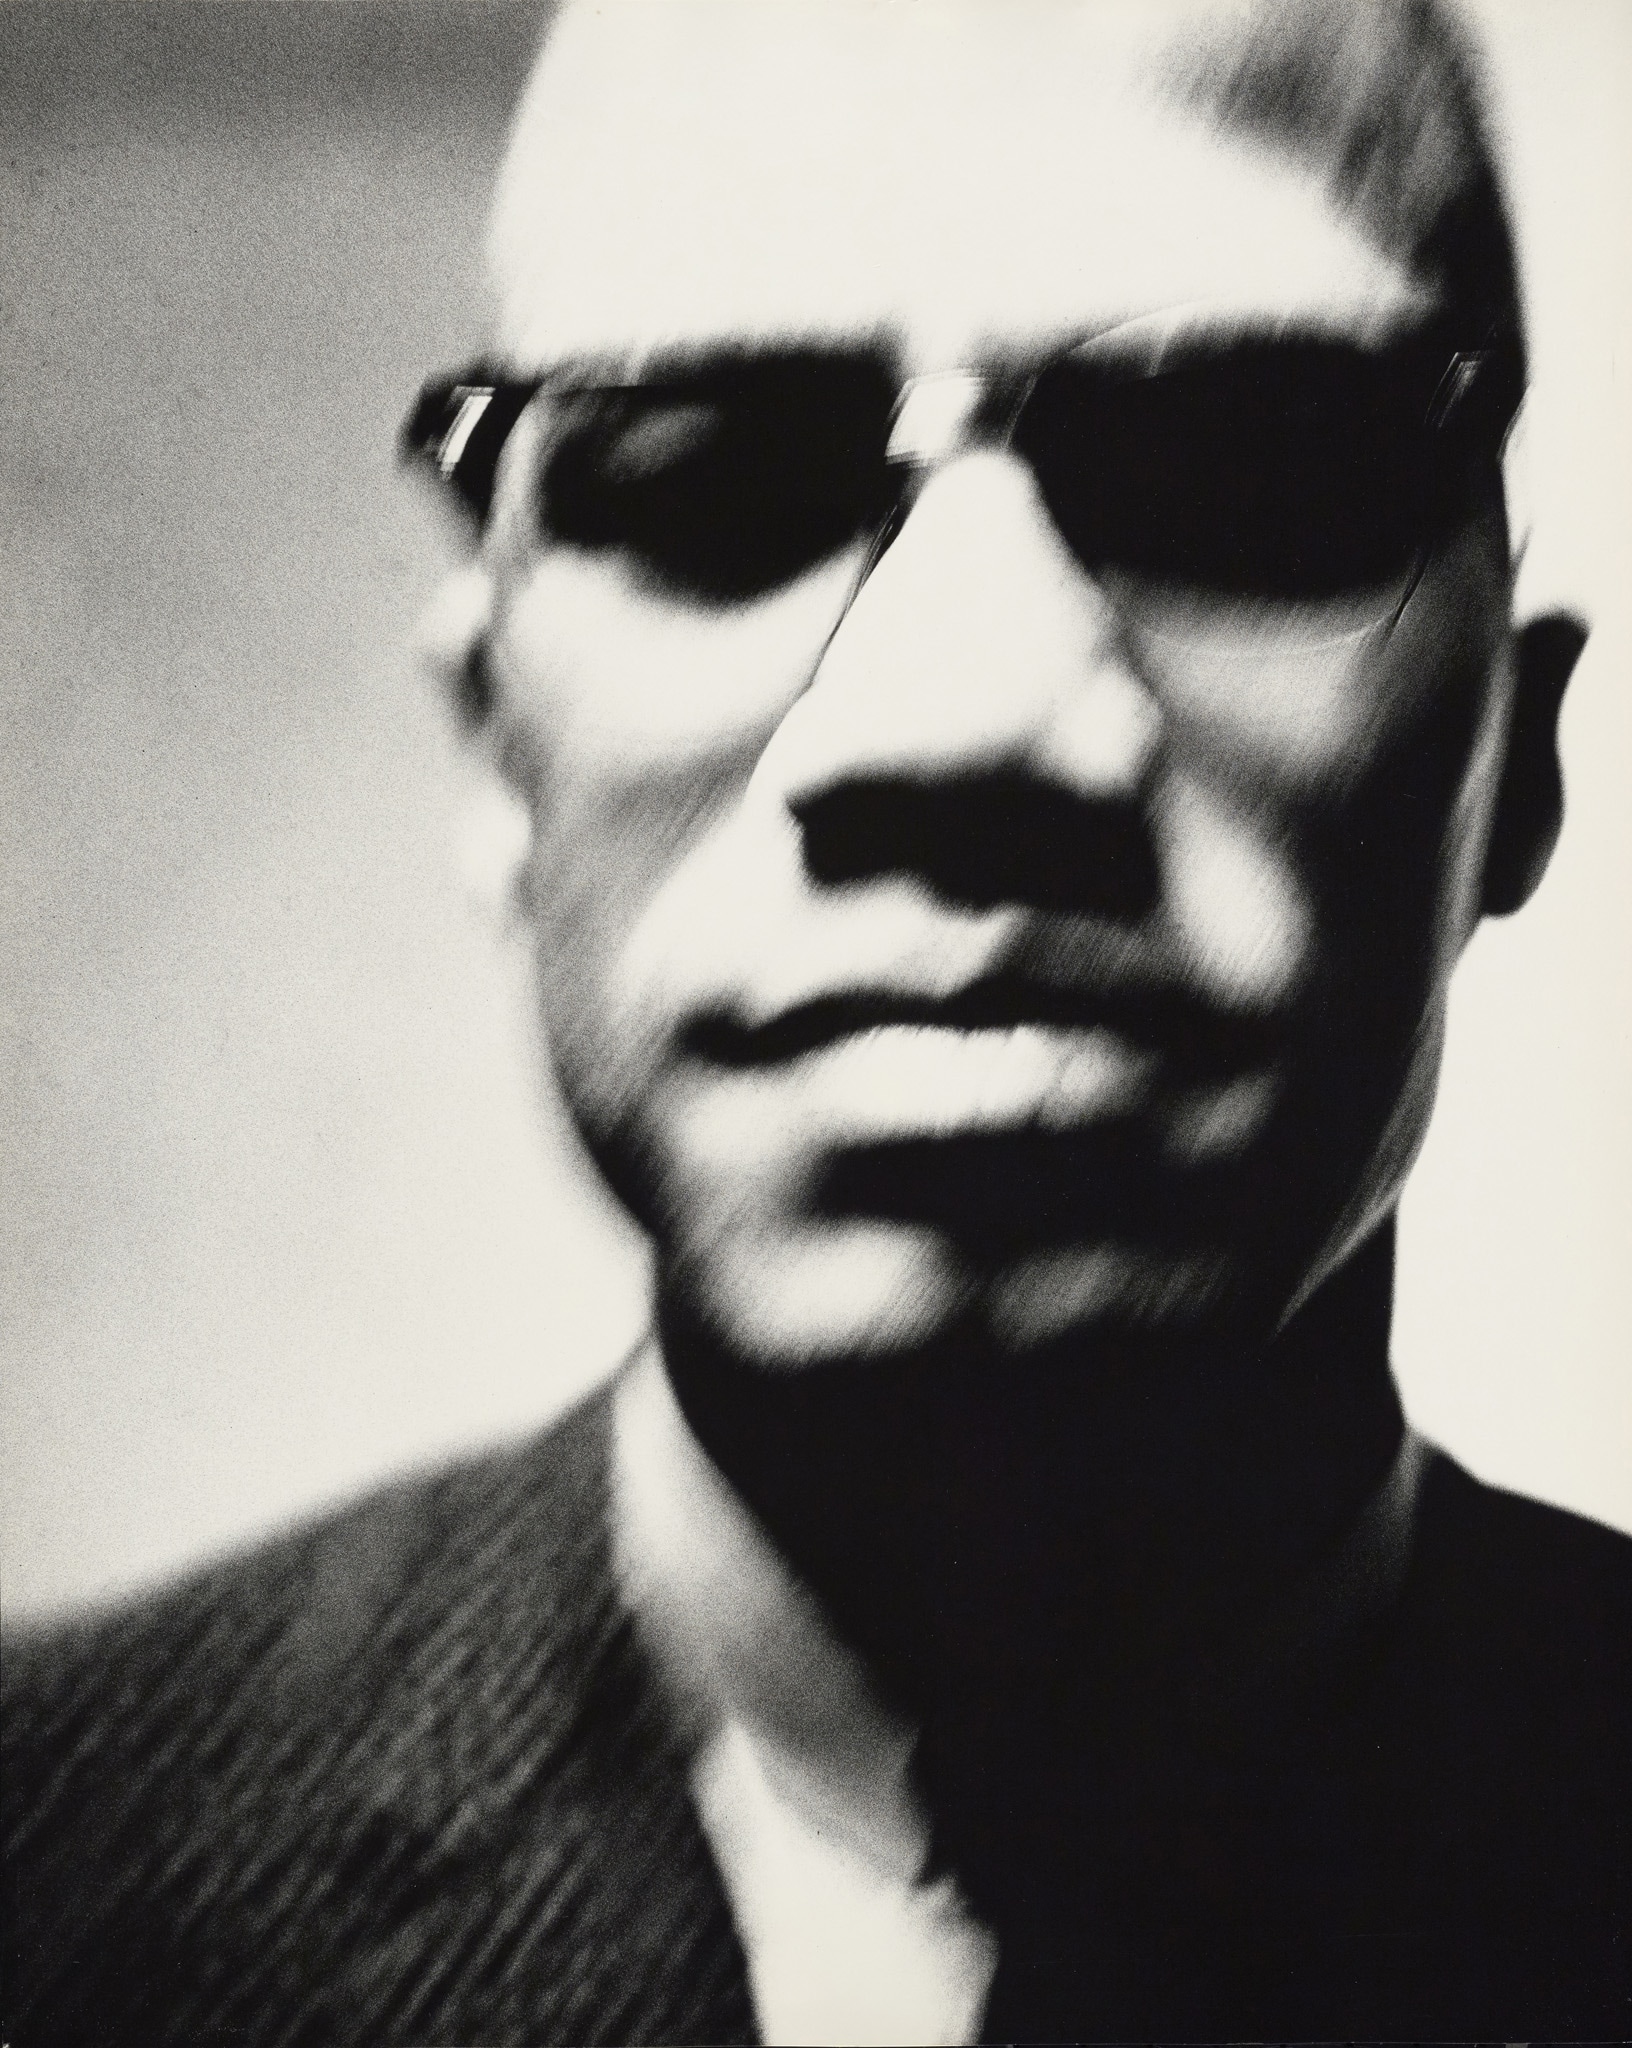 Richard Avedon, Malcolm X, Black Nationalist leader, New York, March 27, 1963. 